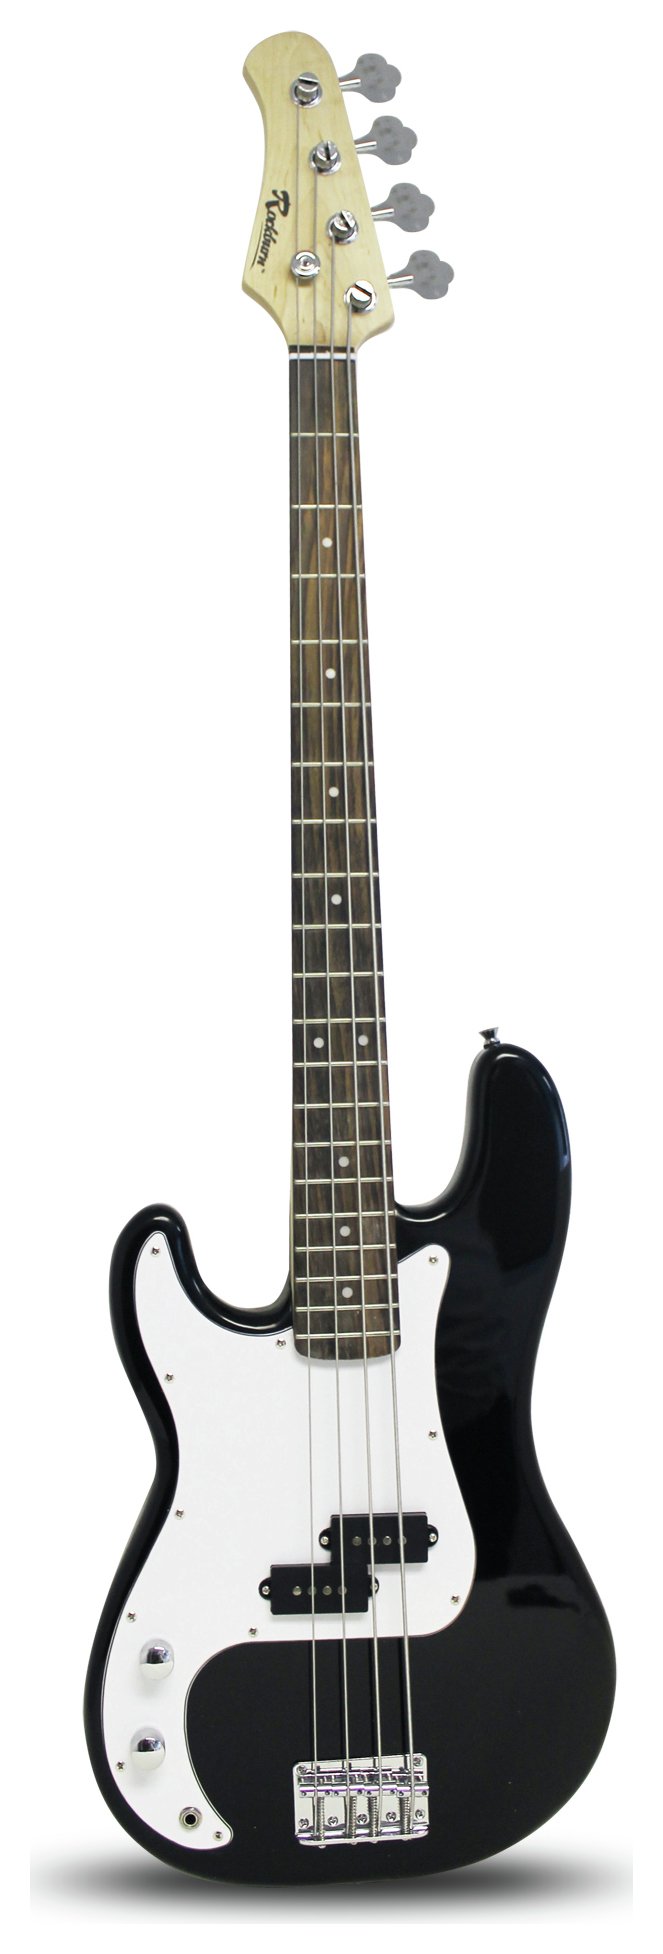 Rockburn Left Hand Bass Guitar - Black